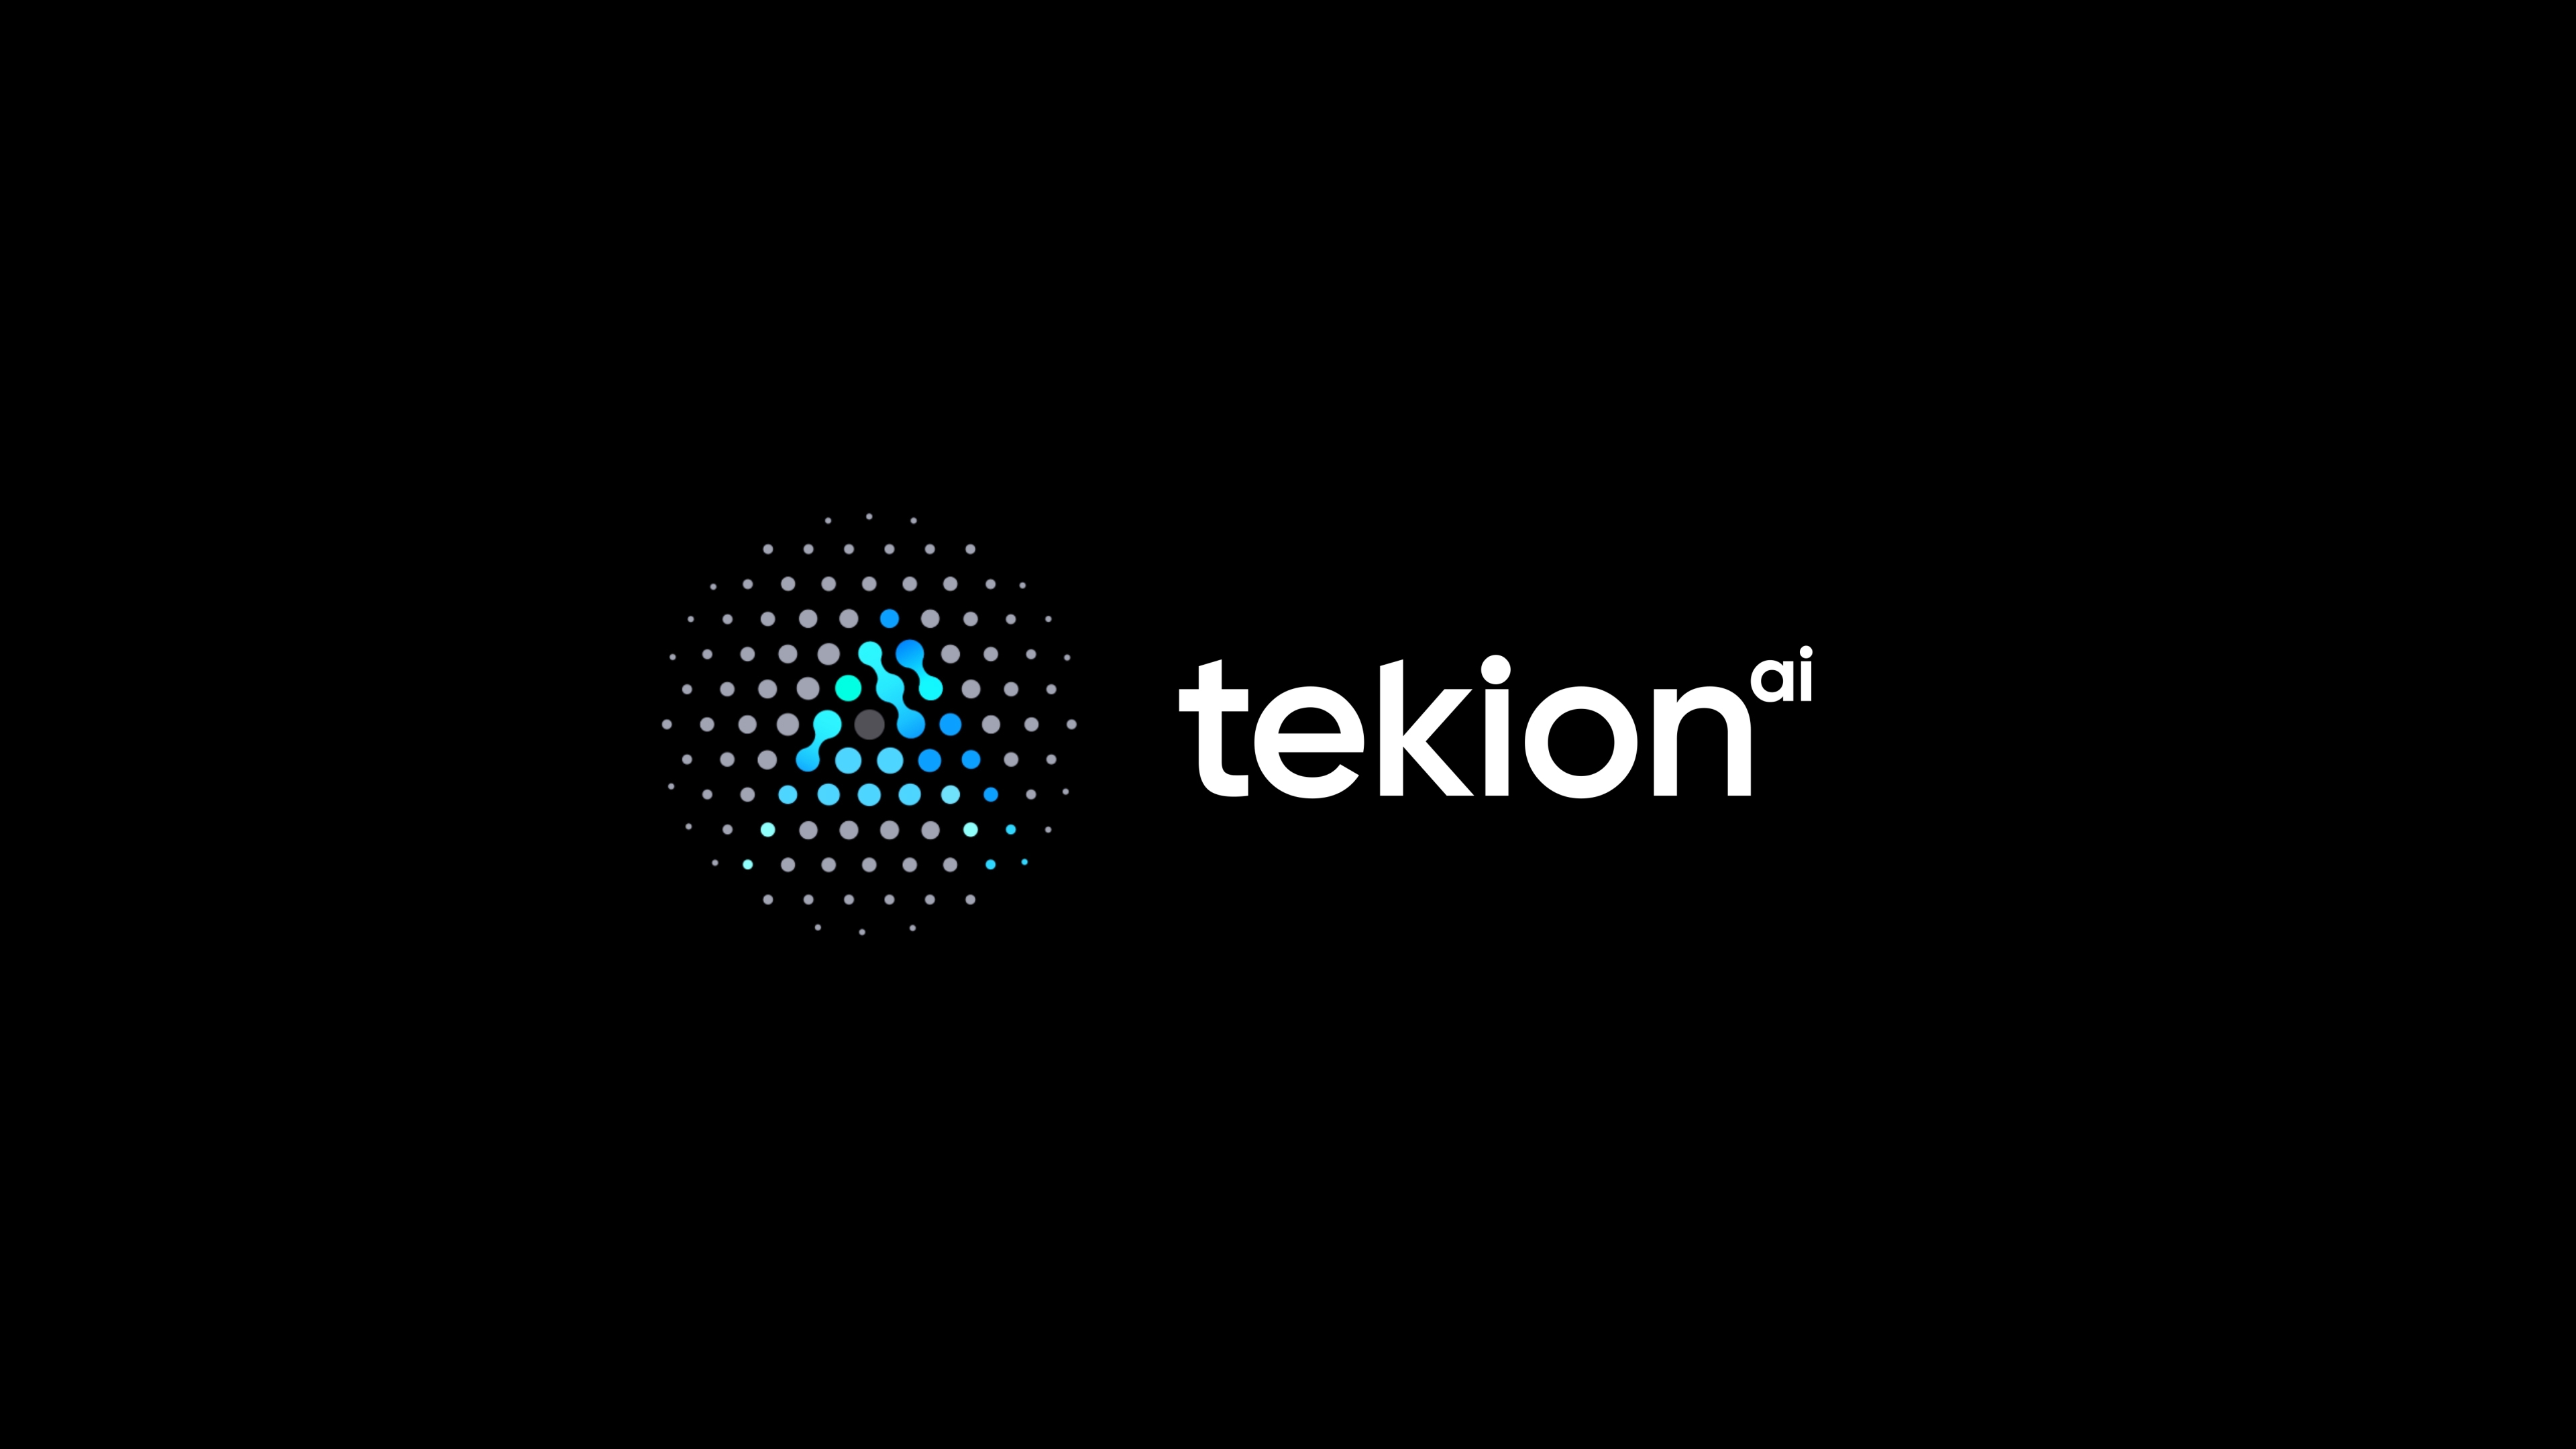 Tekion unveils enhanced AI engine, Tekion AI, with Generative AI capabilities